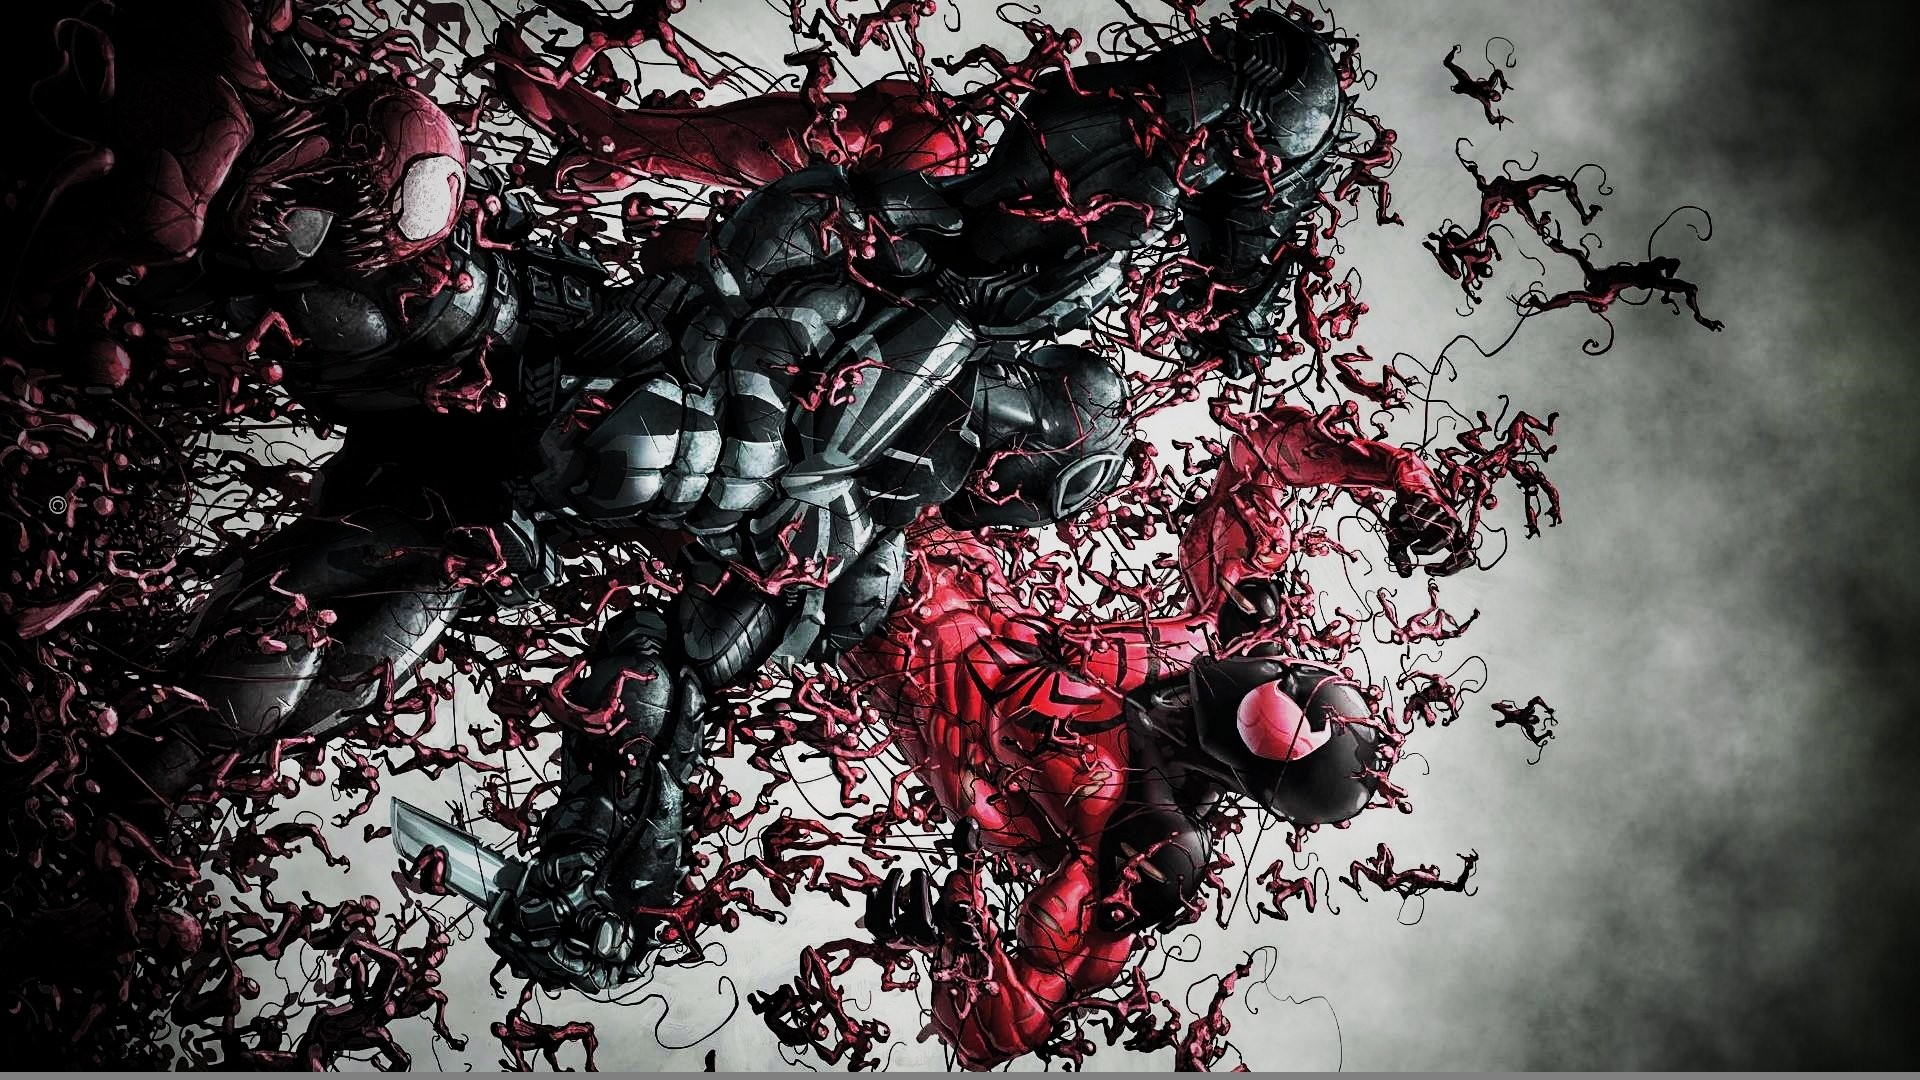 Agent Venom Vs The Scarlet Spider wallpaper | | 615740 .